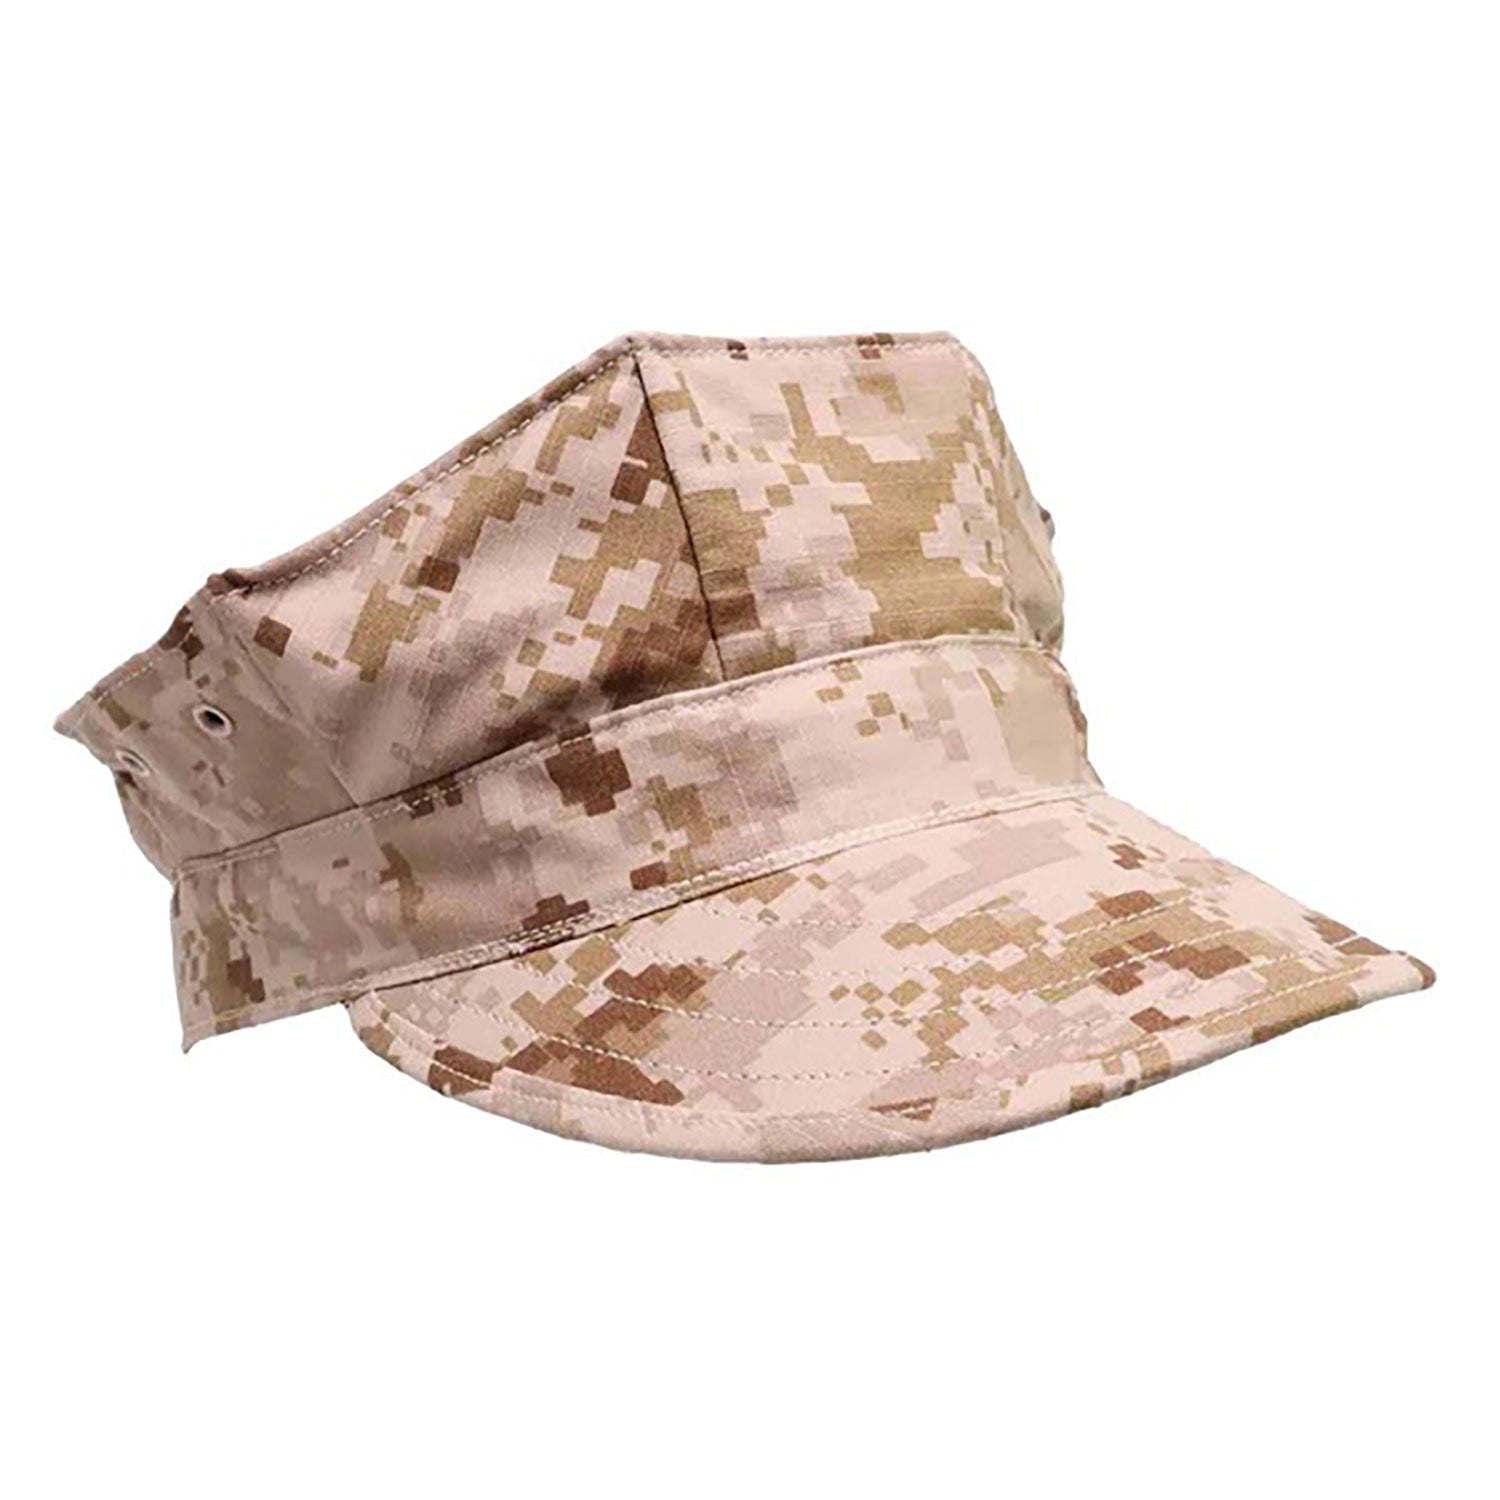 Navy NWU Type II Desert Digital Cover USN AOR1 Tan Desert Camo Hat Cap 7 1/4 (22 5/8-58cm) / New